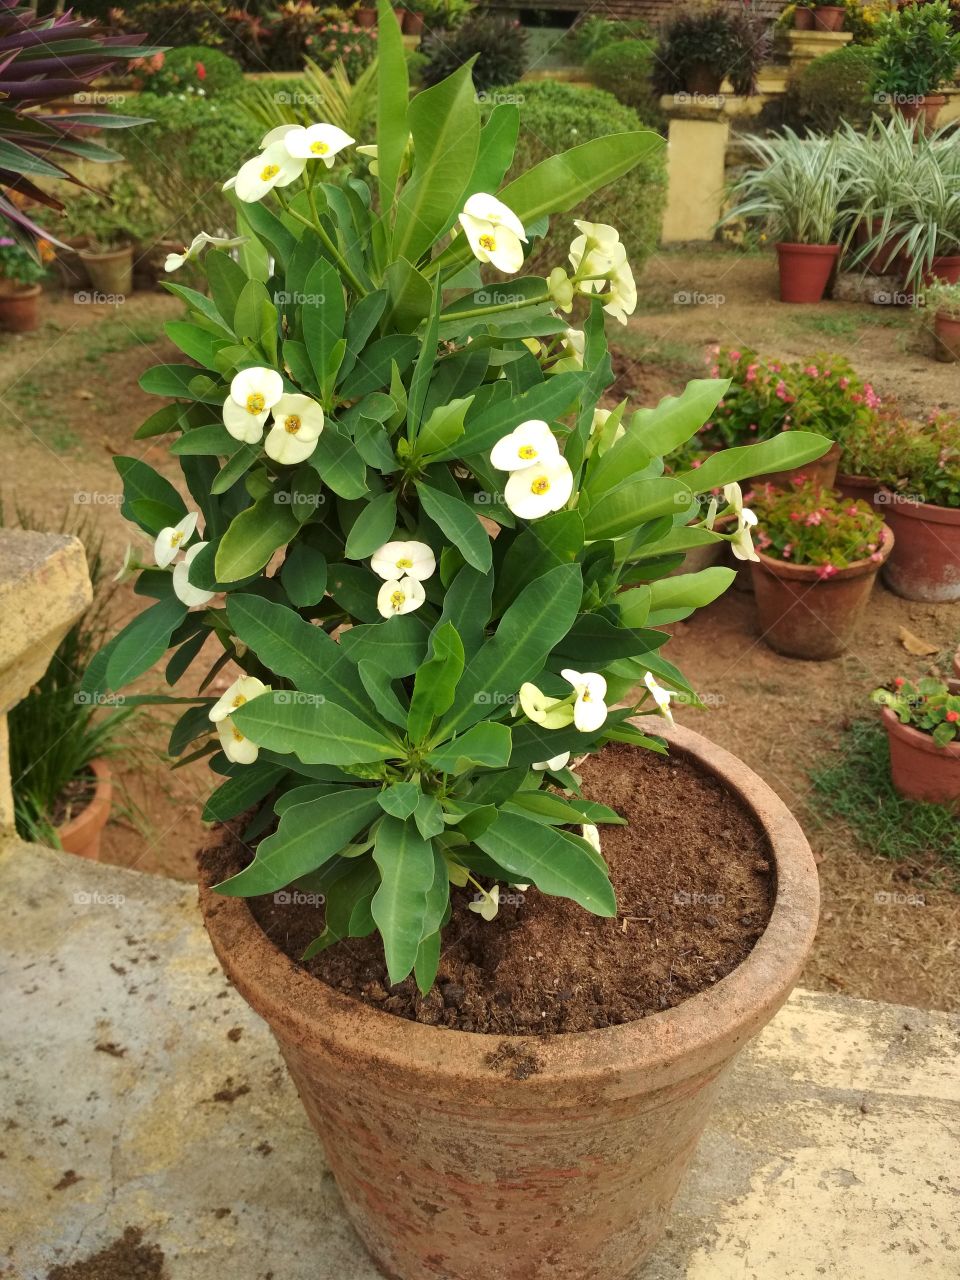 while Euphorbia